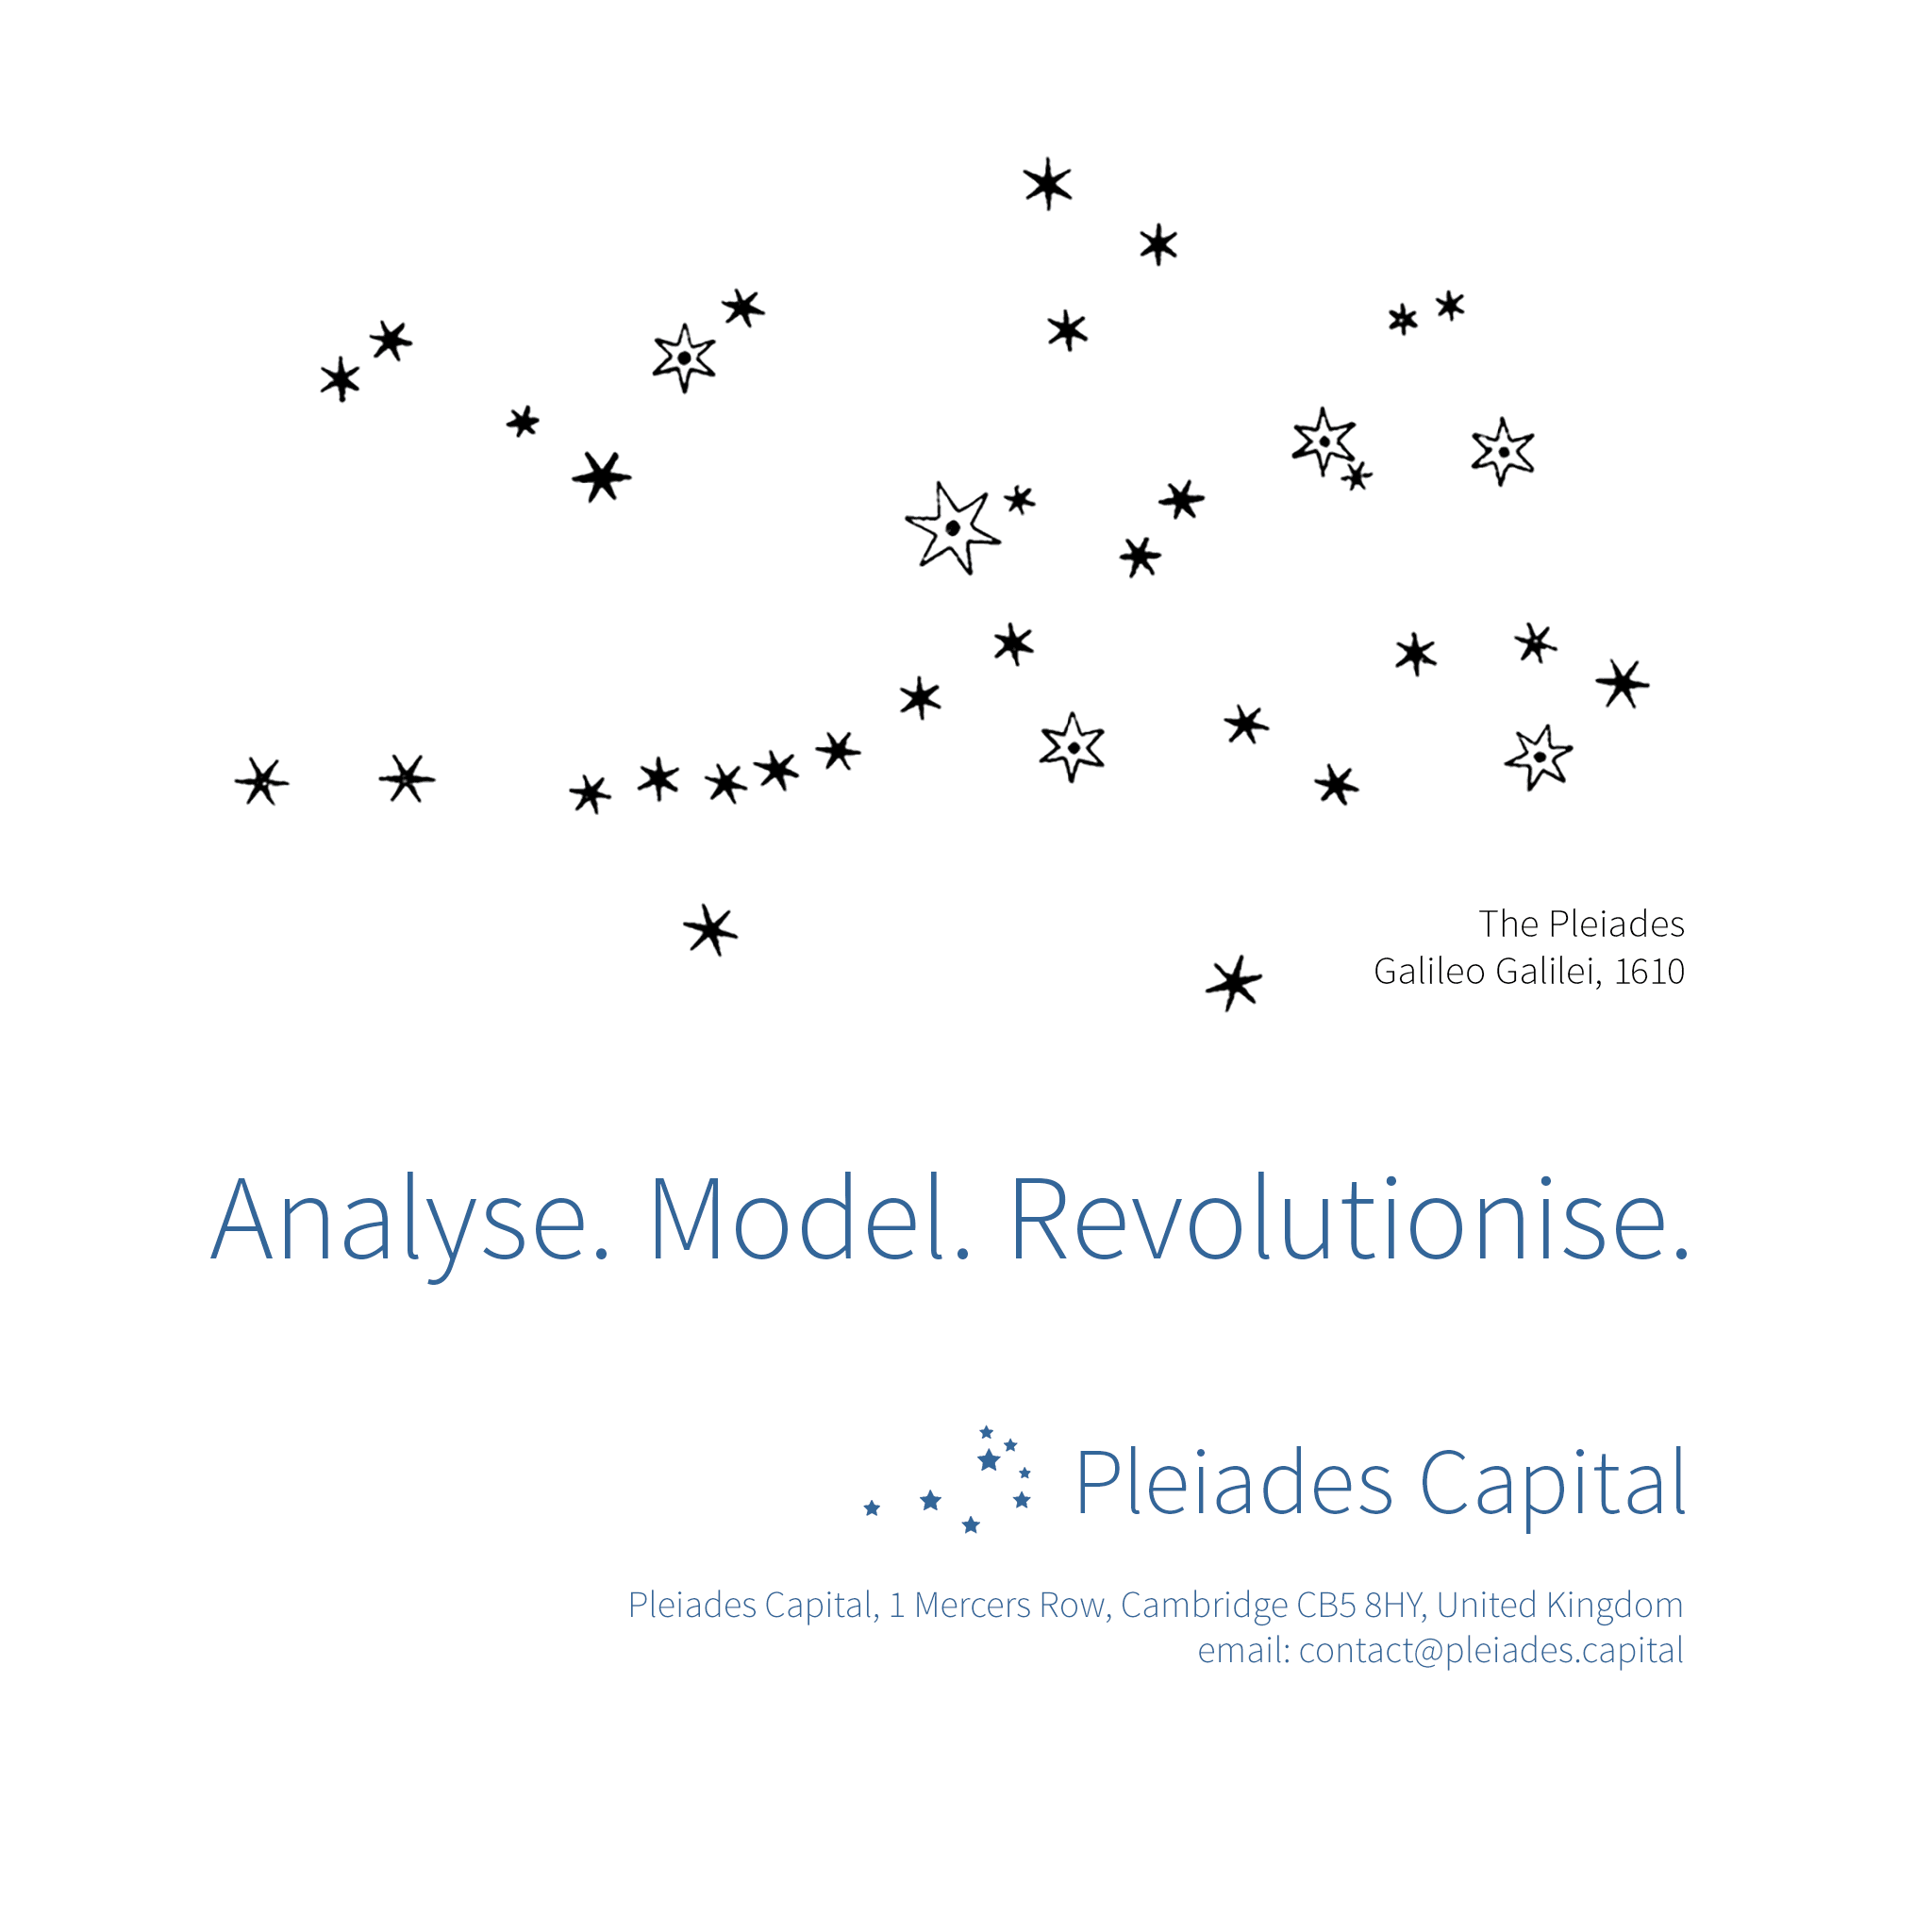 Pleiades Capital, Analyse, Model, Revolutionise